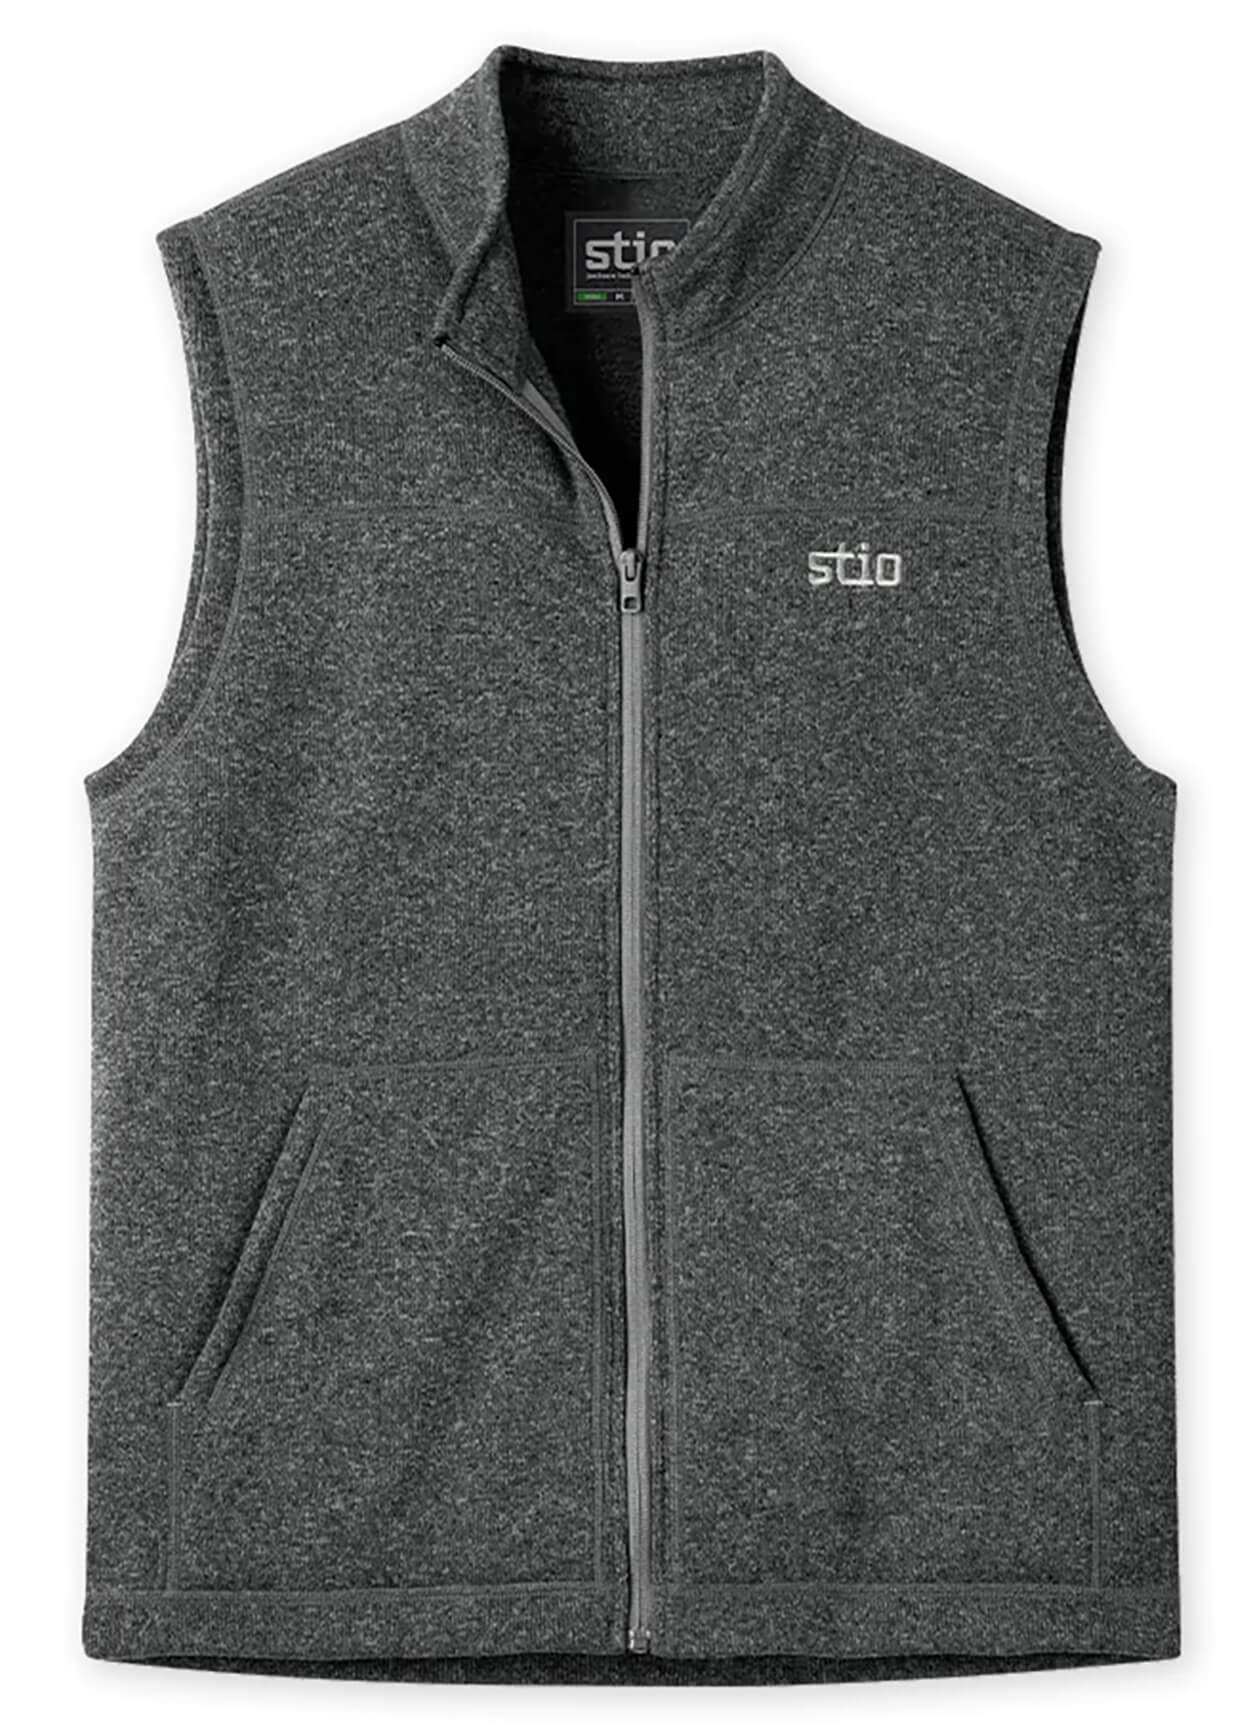 STIO Men's Wilcox Fleece Vest, Abyss Heather